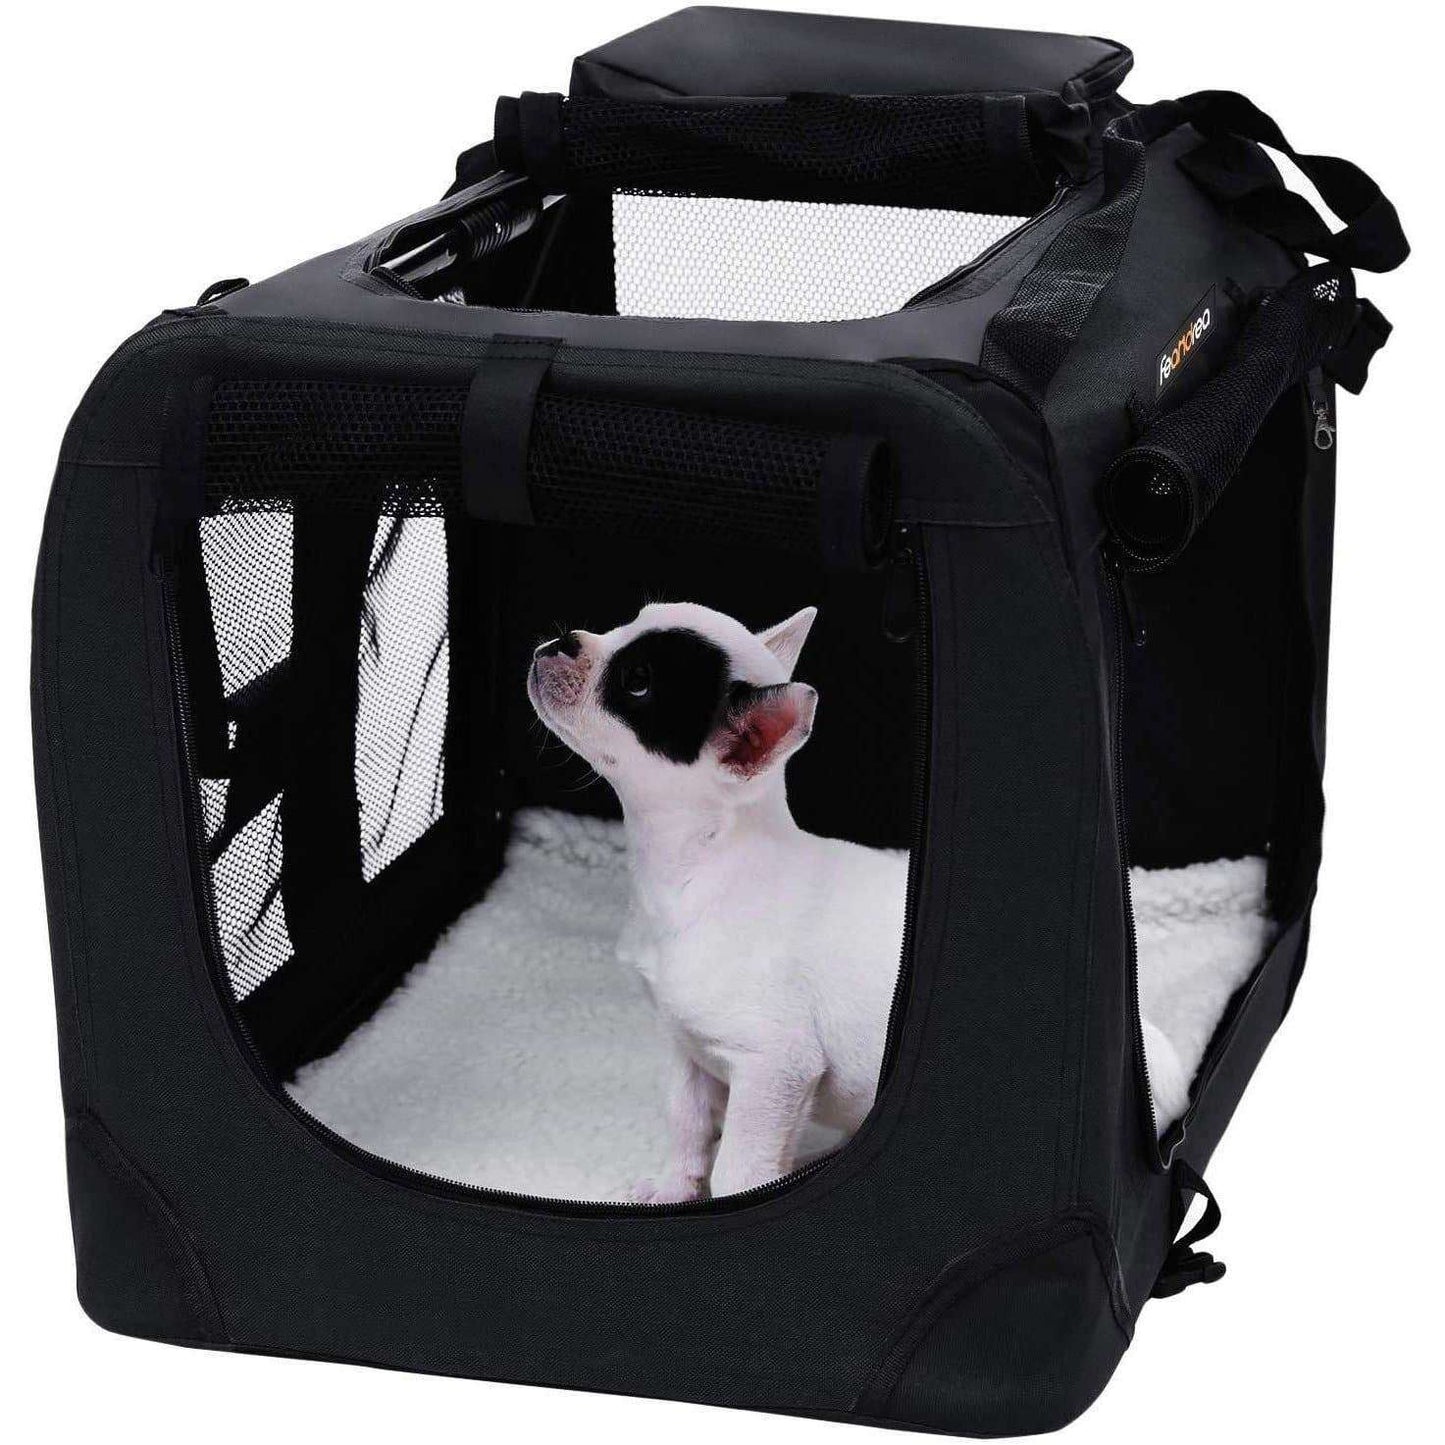 Nancy's Transport Box - Dog Box - Sac de transport - Box pliable pour chat - Noir